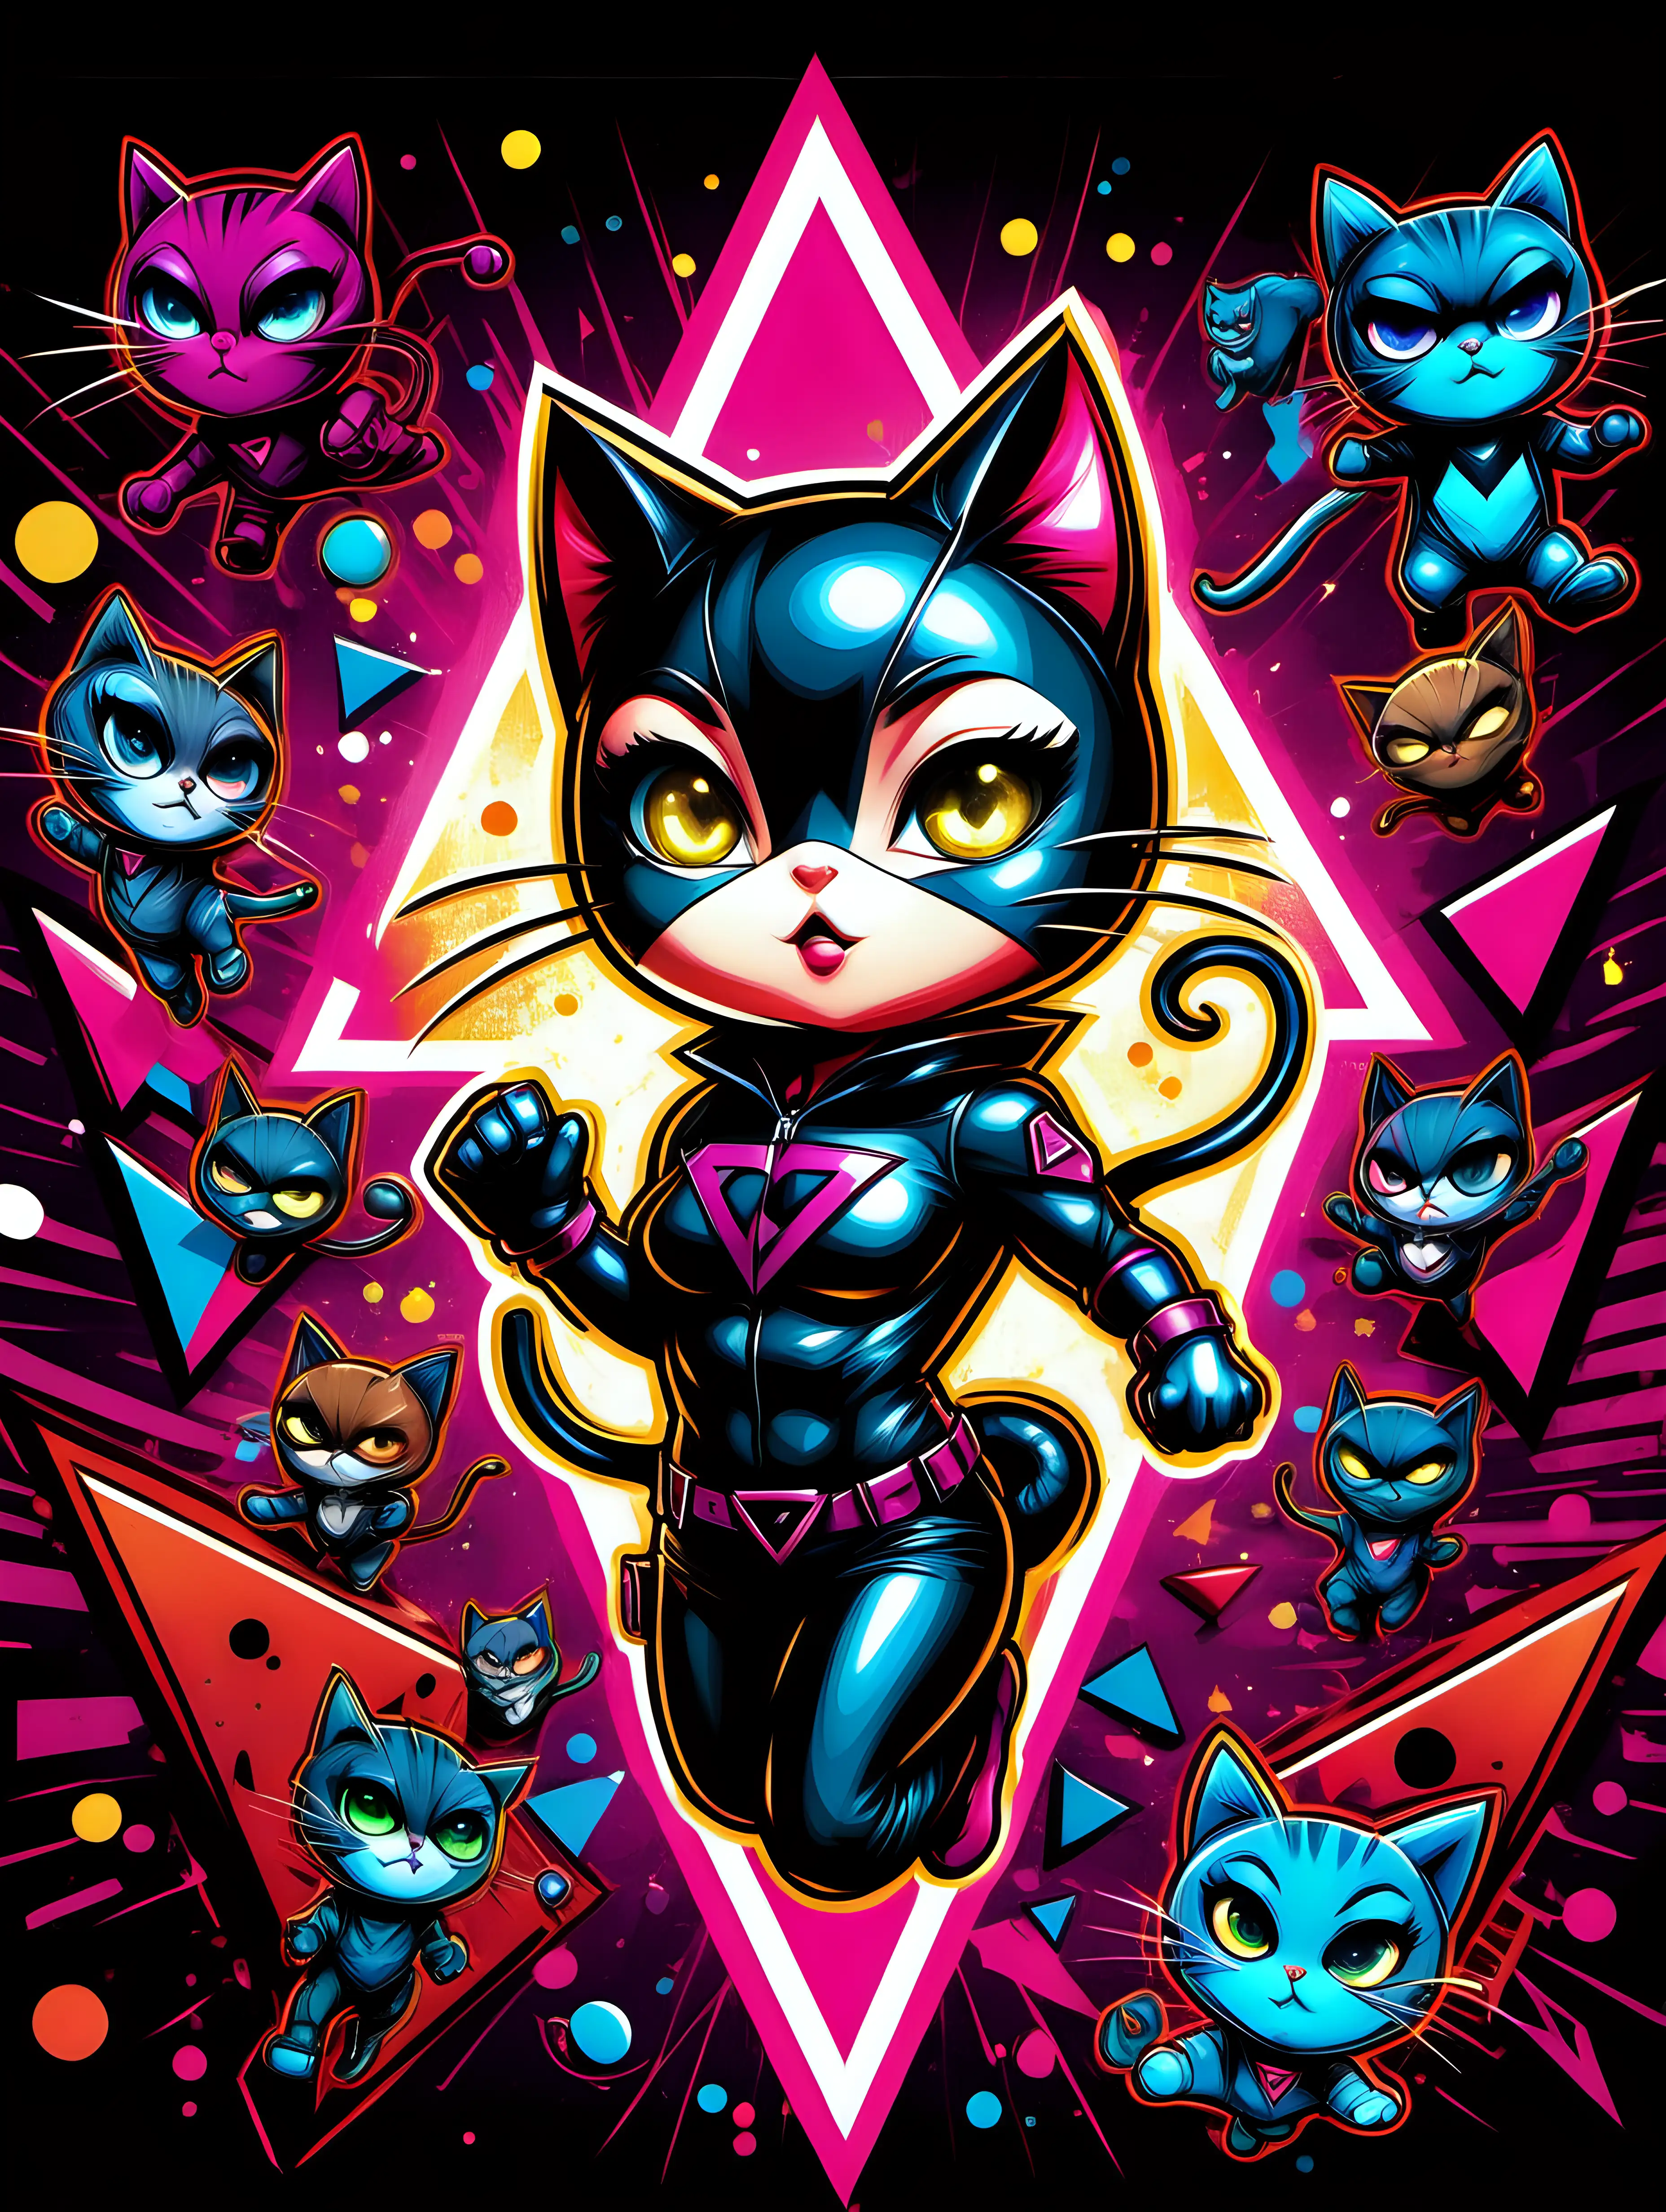 Cute Kitty Daredevil in Vibrant Pop Art Graffiti